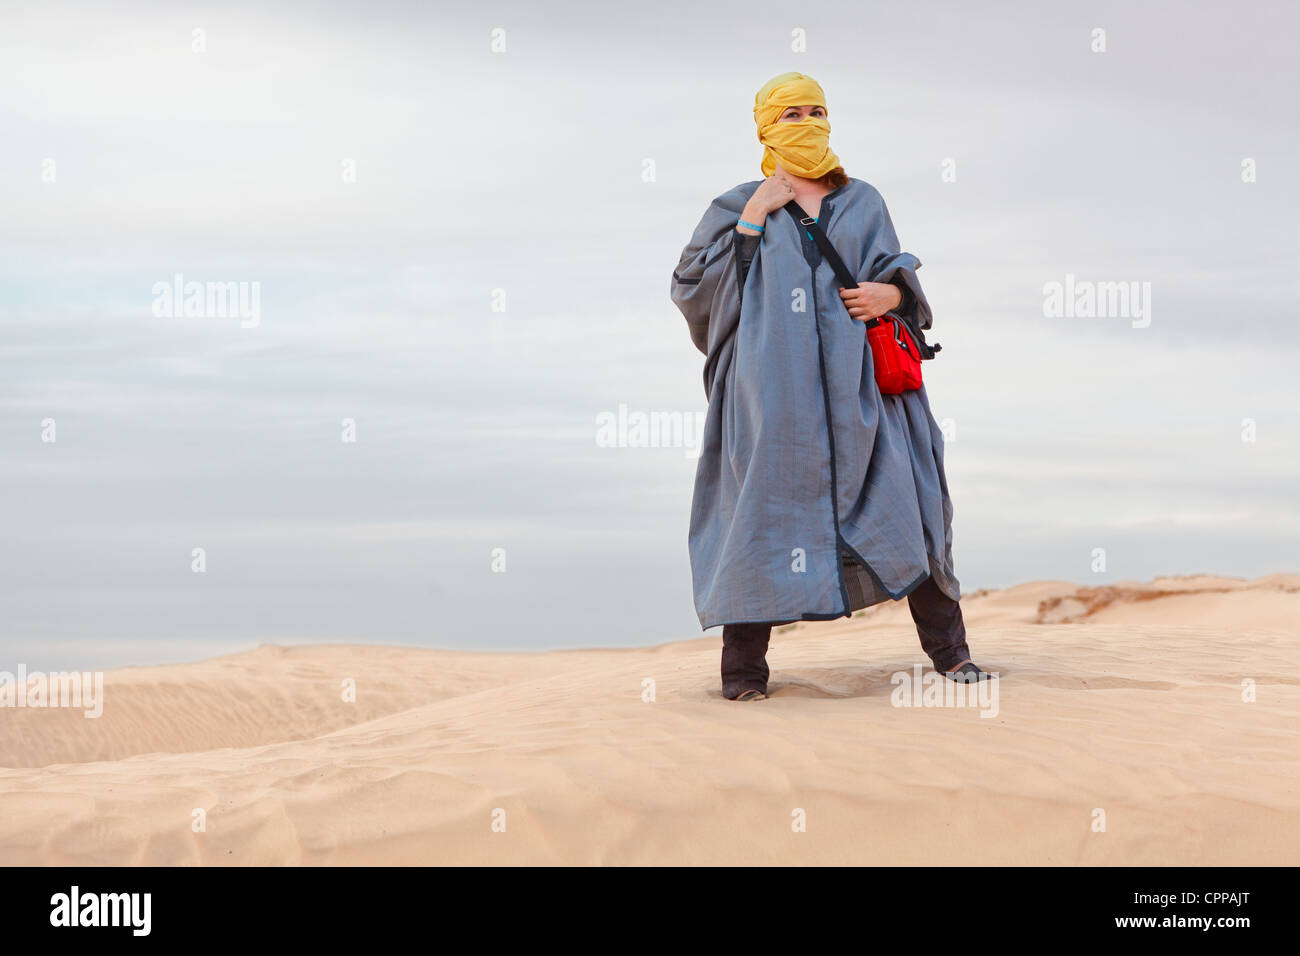 Woman in Bedouin clothes standing on dune in desert. Sahara desert, Tunisia. Horizontal Stock Photo